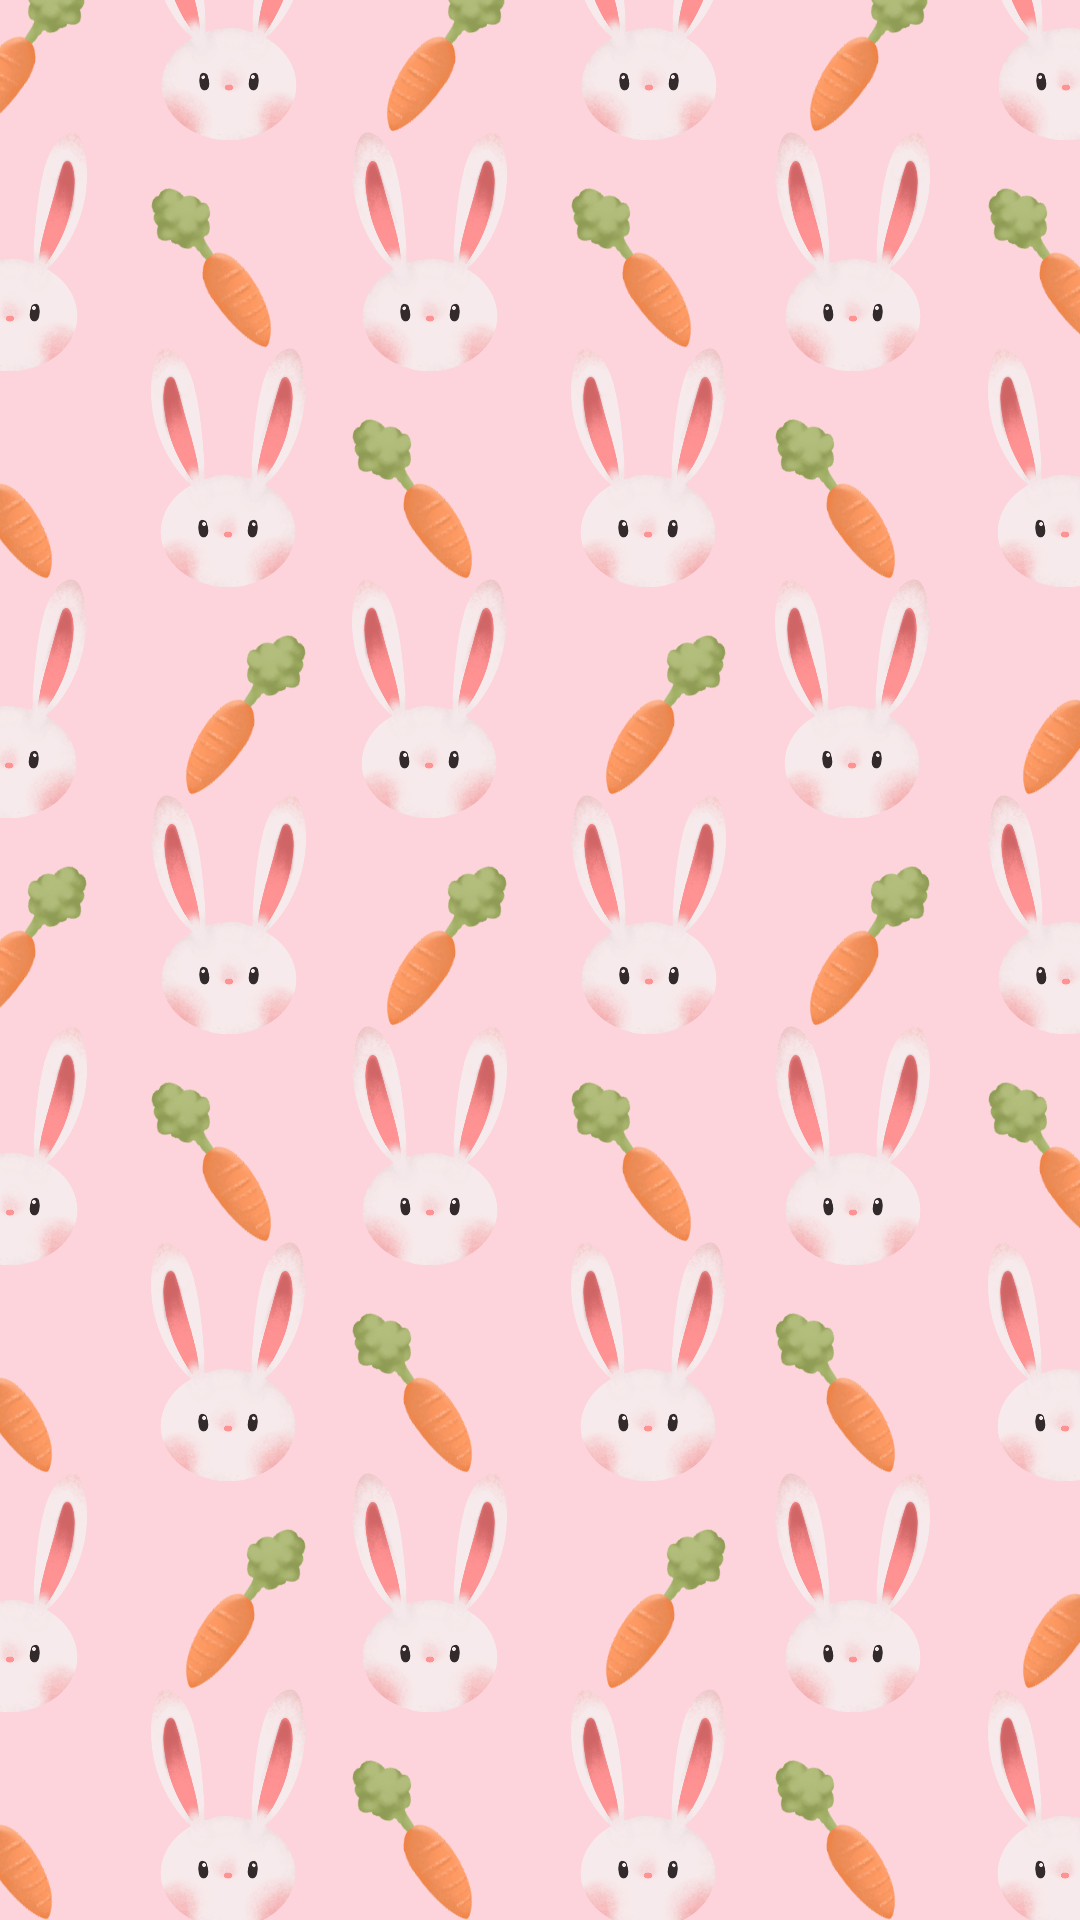 Wallpaper Páscoa by Gocase. Bunny wallpaper, Rabbit wallpaper, Easter wallpaper